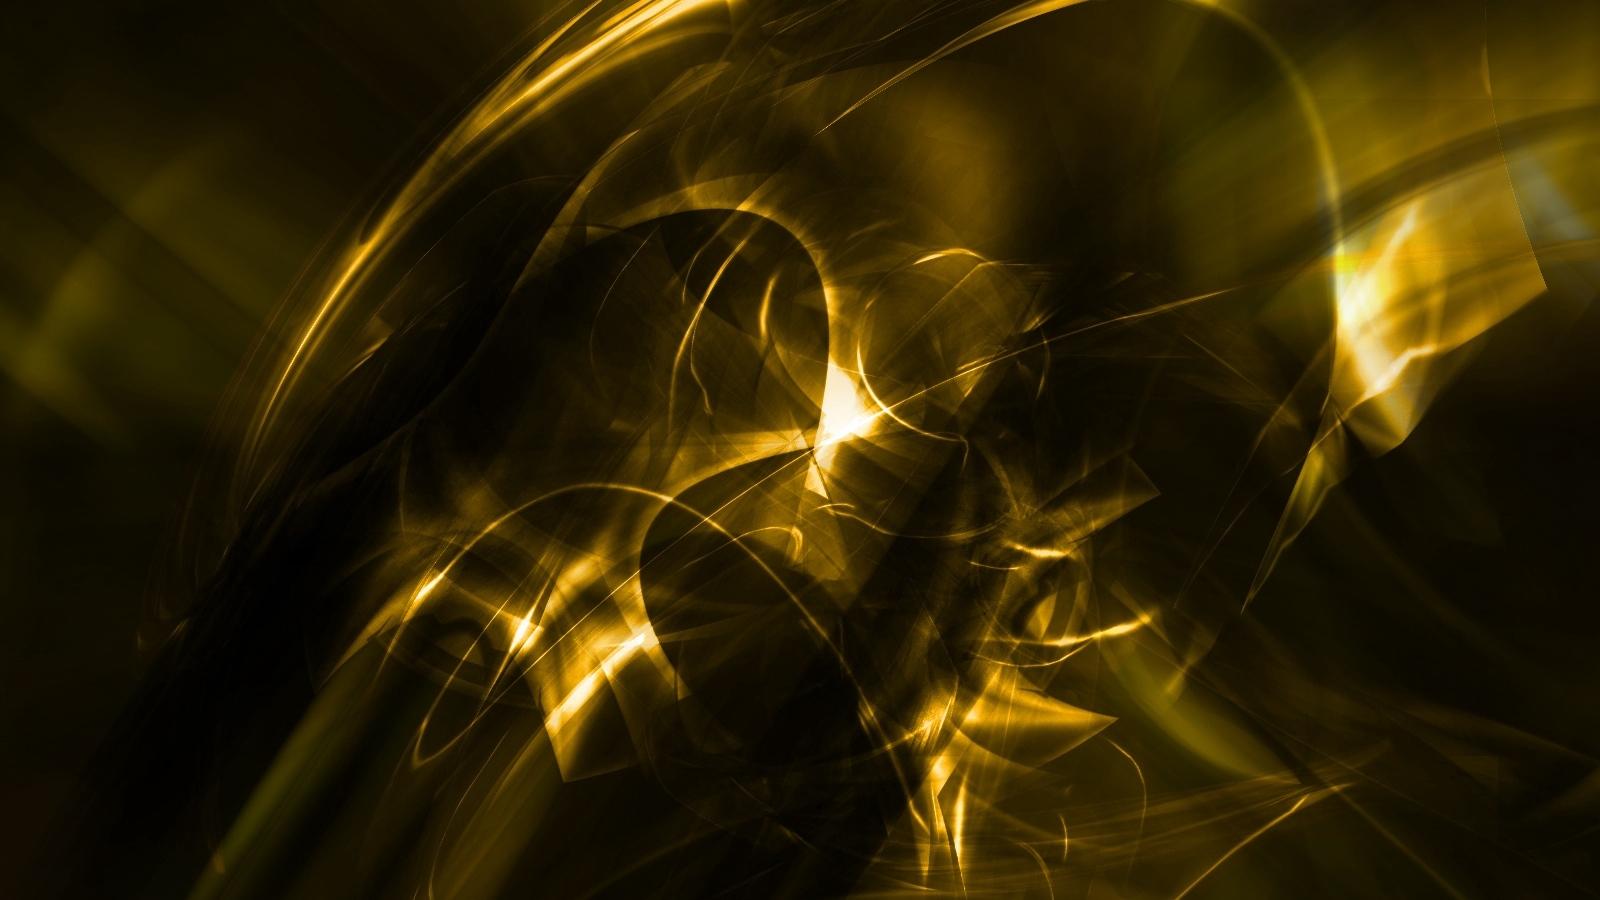 Download wallpaper 1600x900 fractal, smoke, yellow, light widescreen